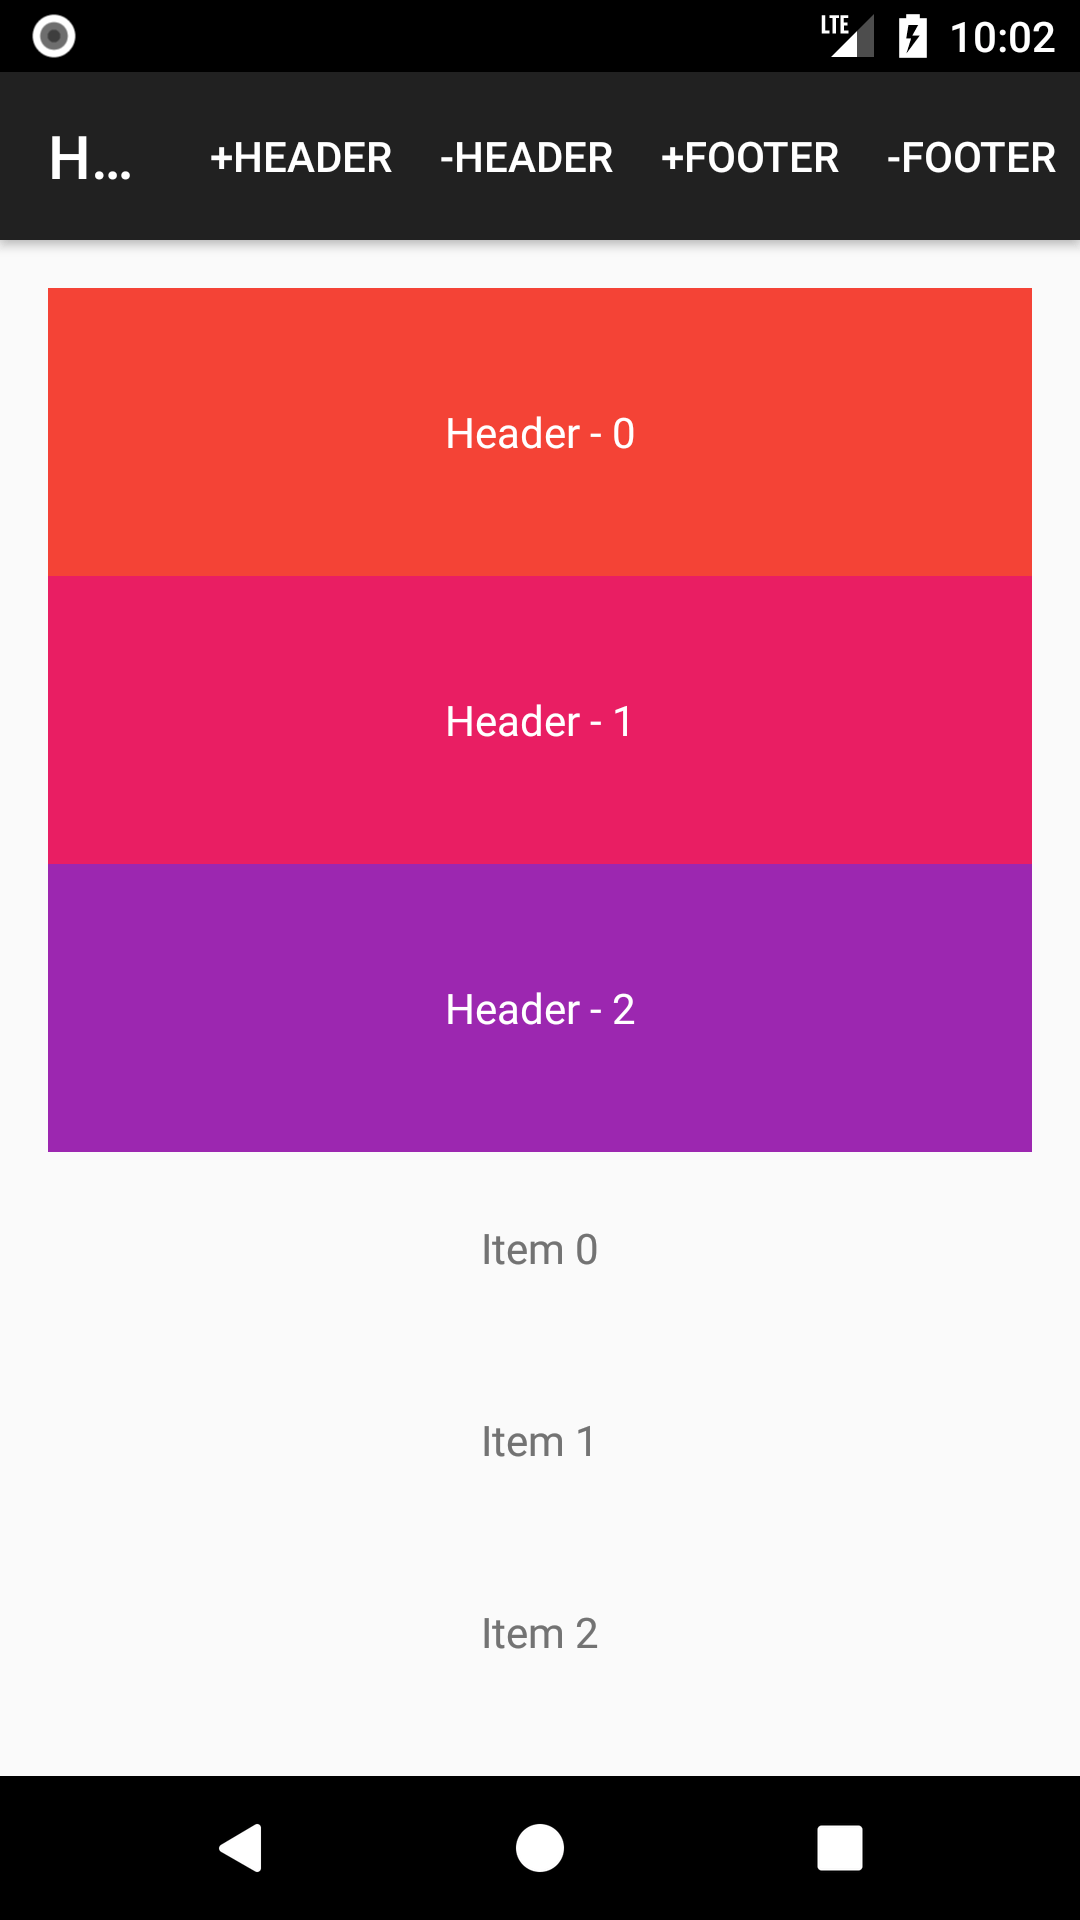 Screenshot 2 - Header/Footer (Add/Remove items)